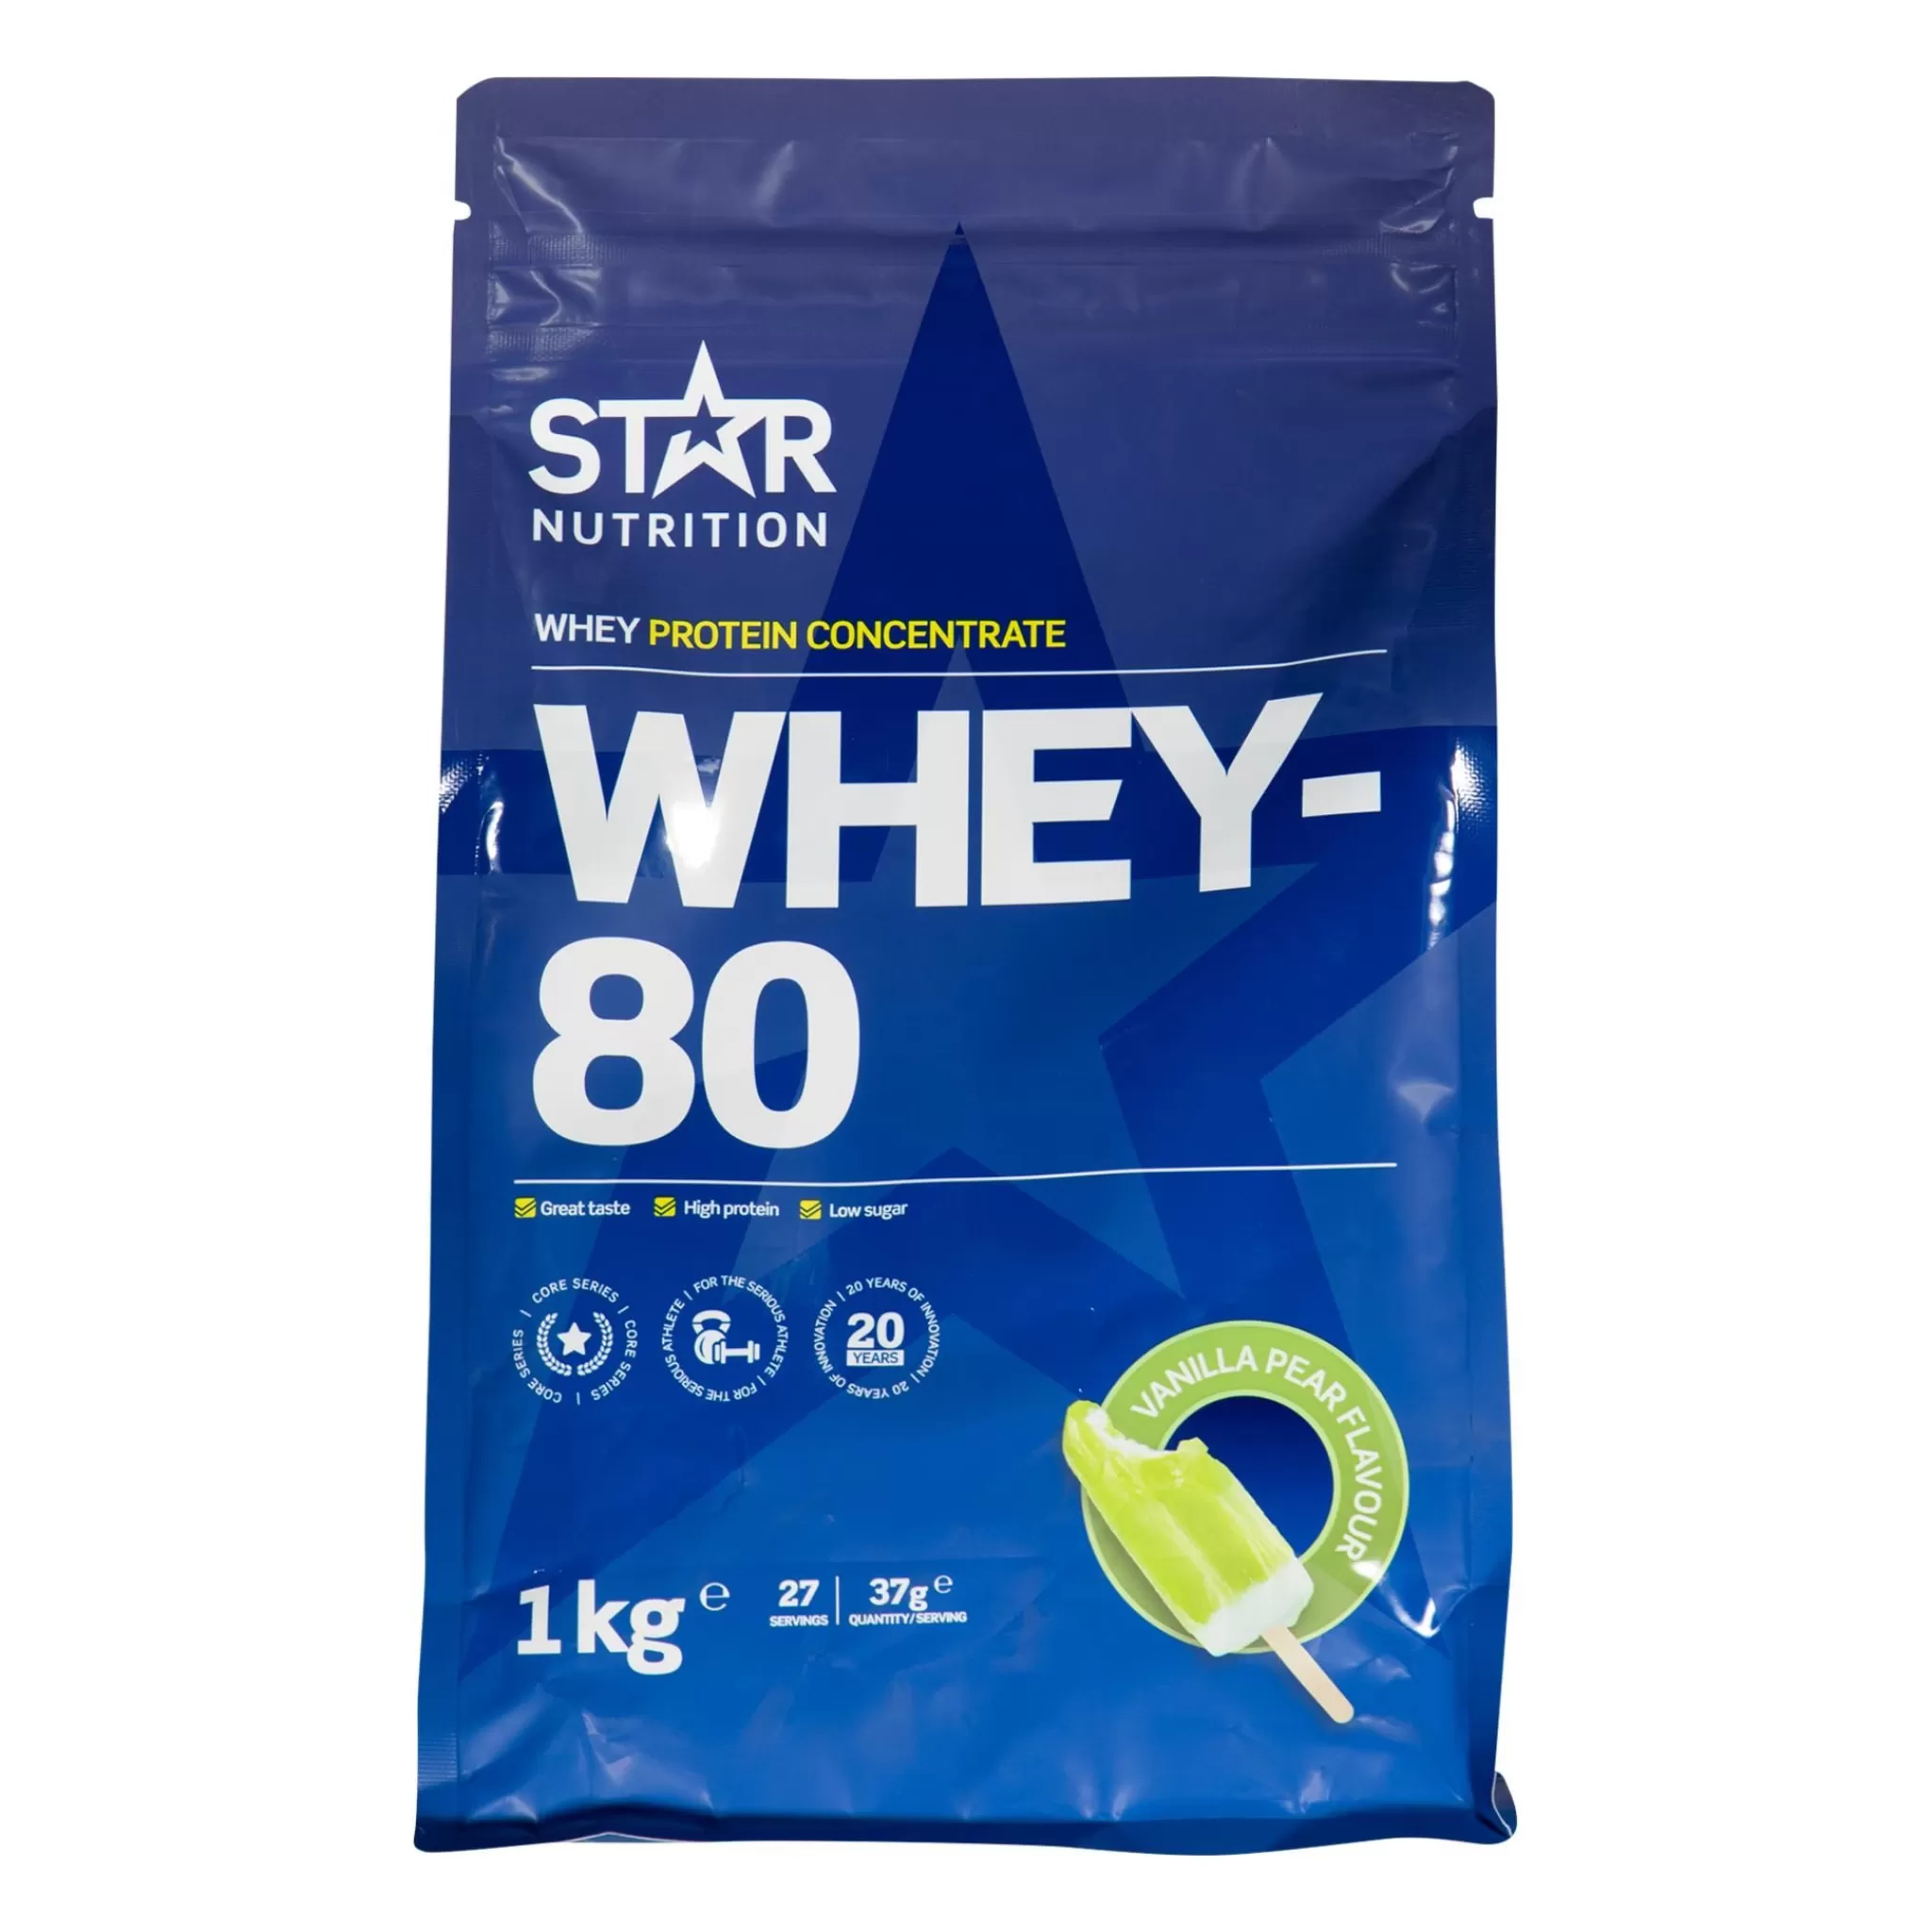 Cheap Star Nutrition Whey-80, Proteinpulver